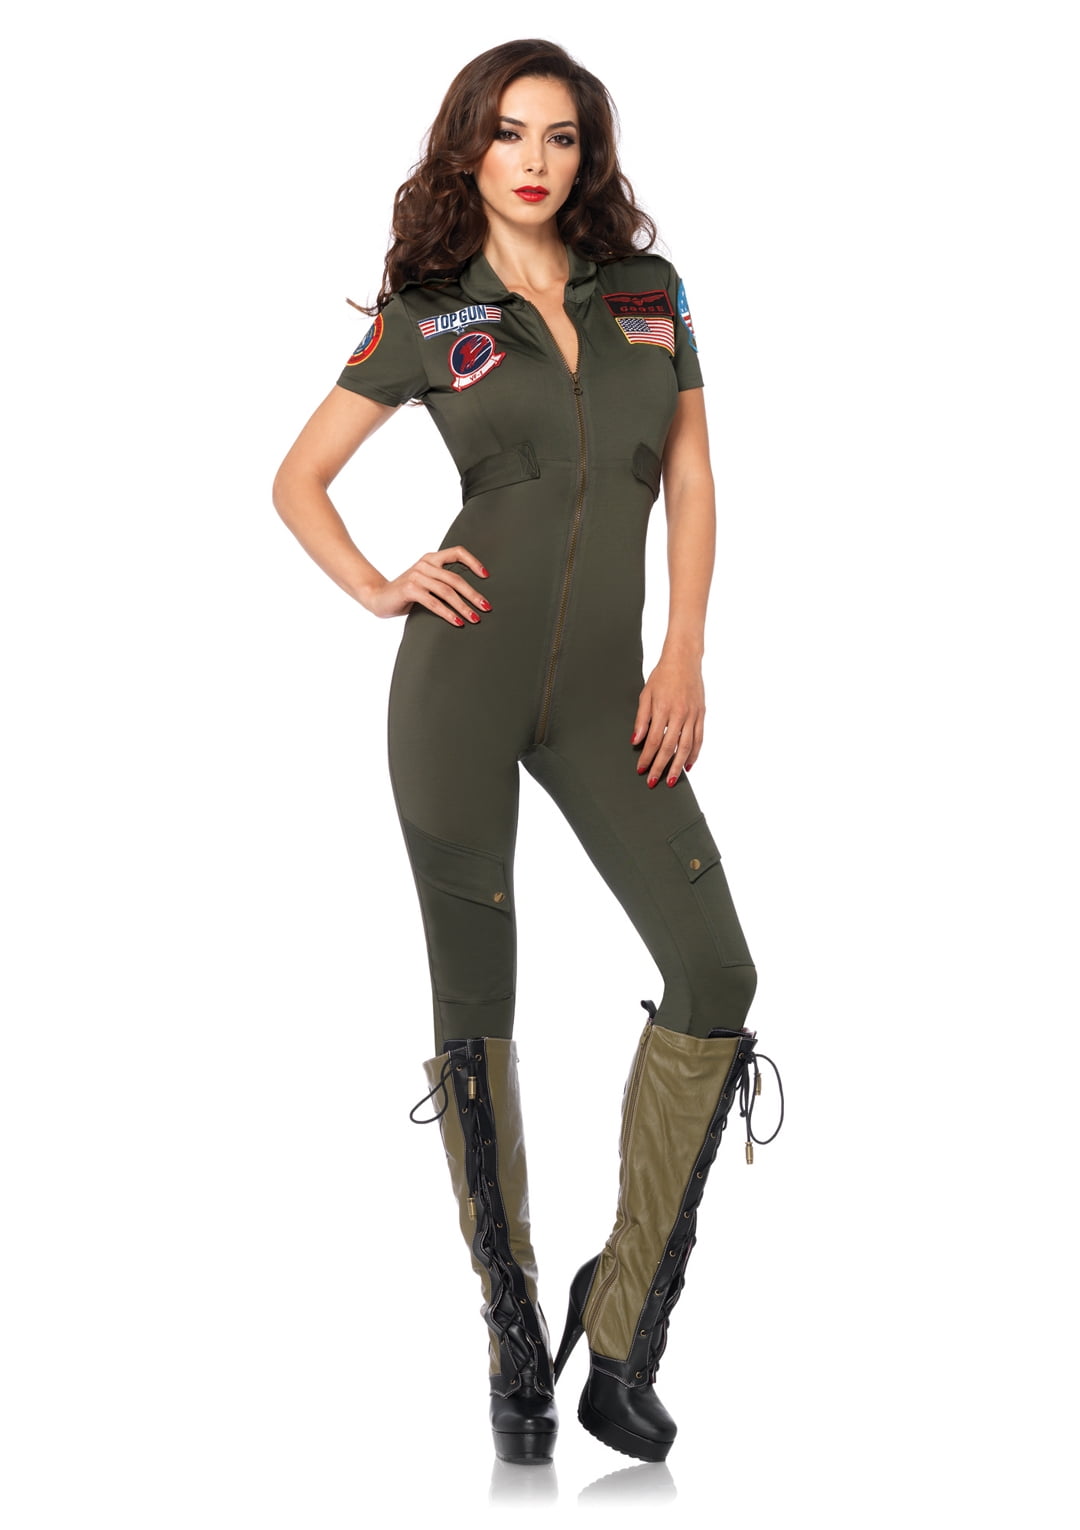 Australsk person rabat liv Leg Avenue Women's Top Gun Flight Catsuit Costume - Walmart.com